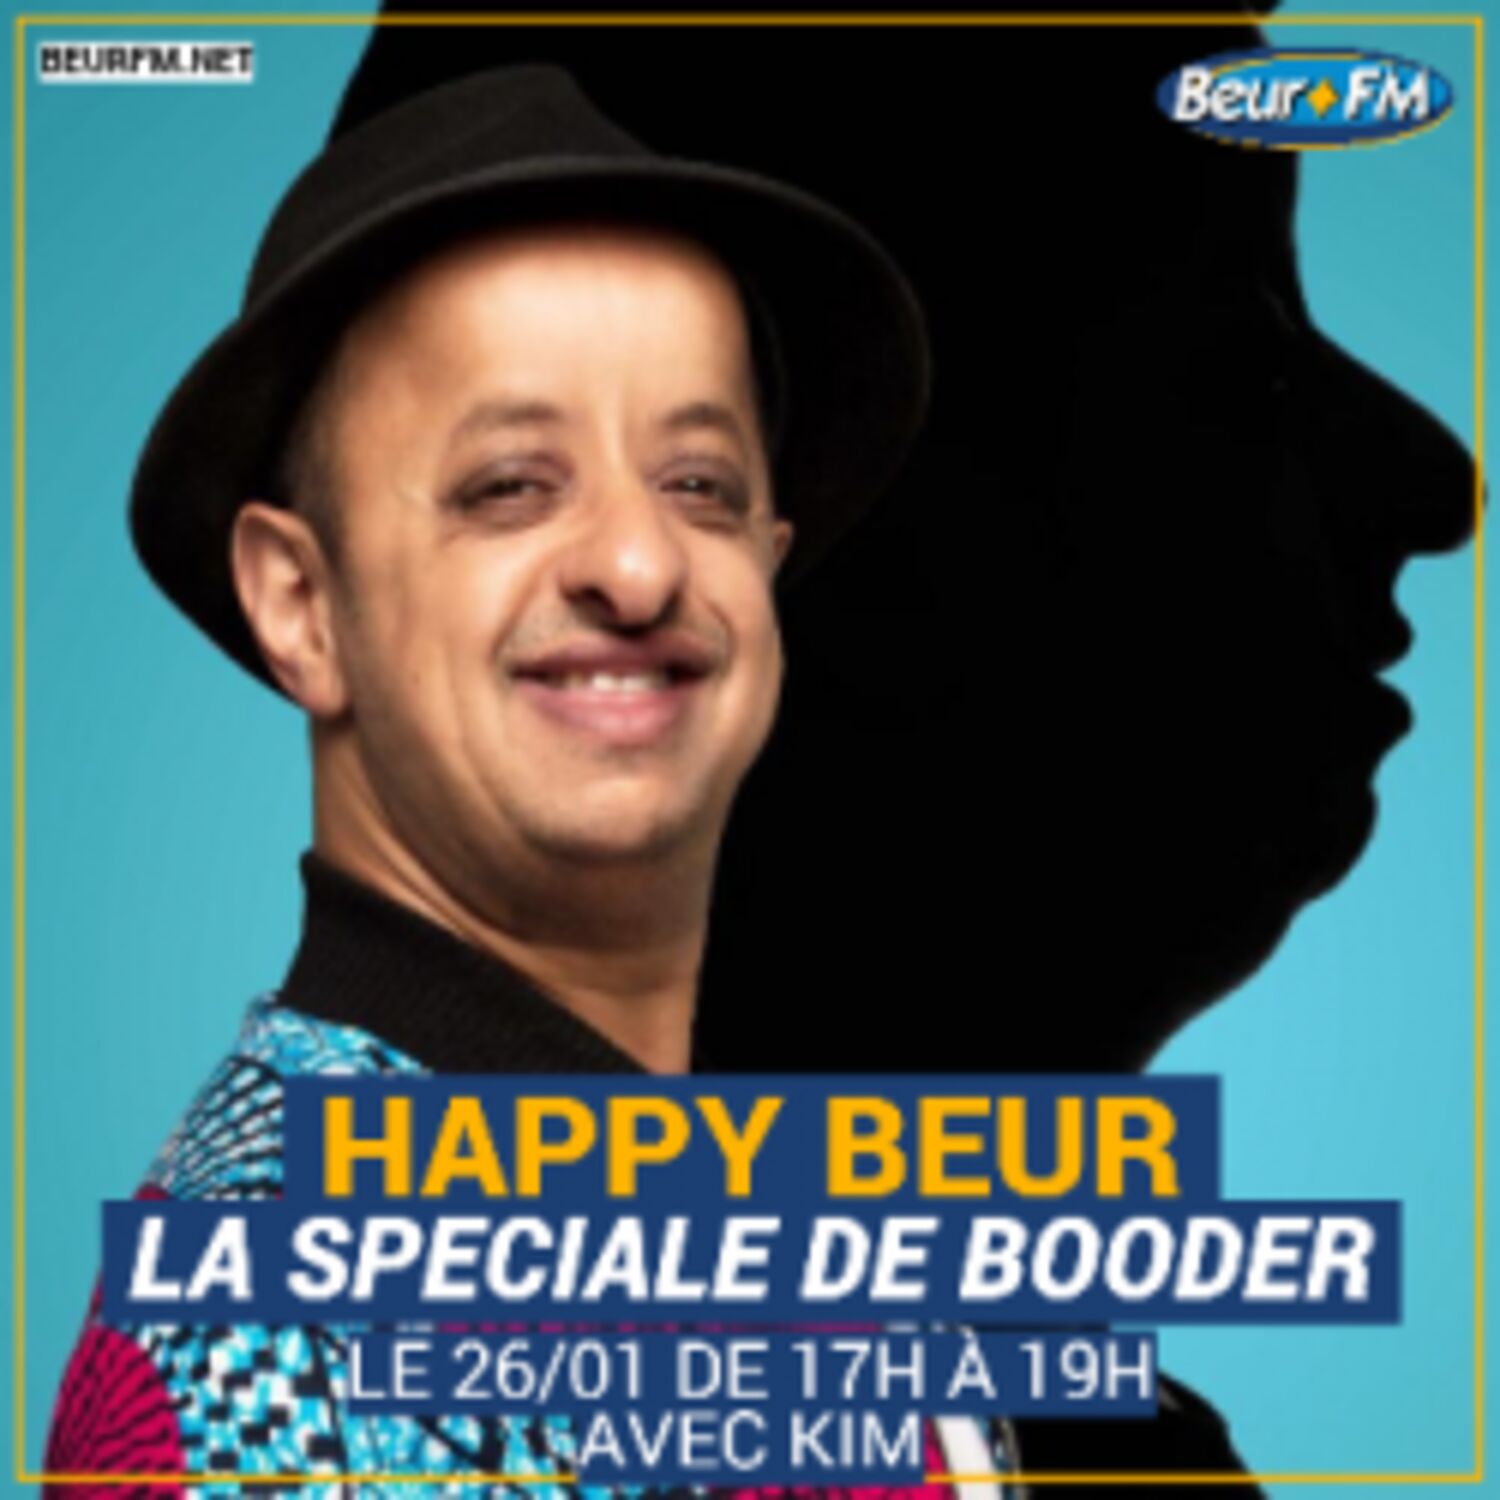 Happy Beur du 26-01-2021 : Booder